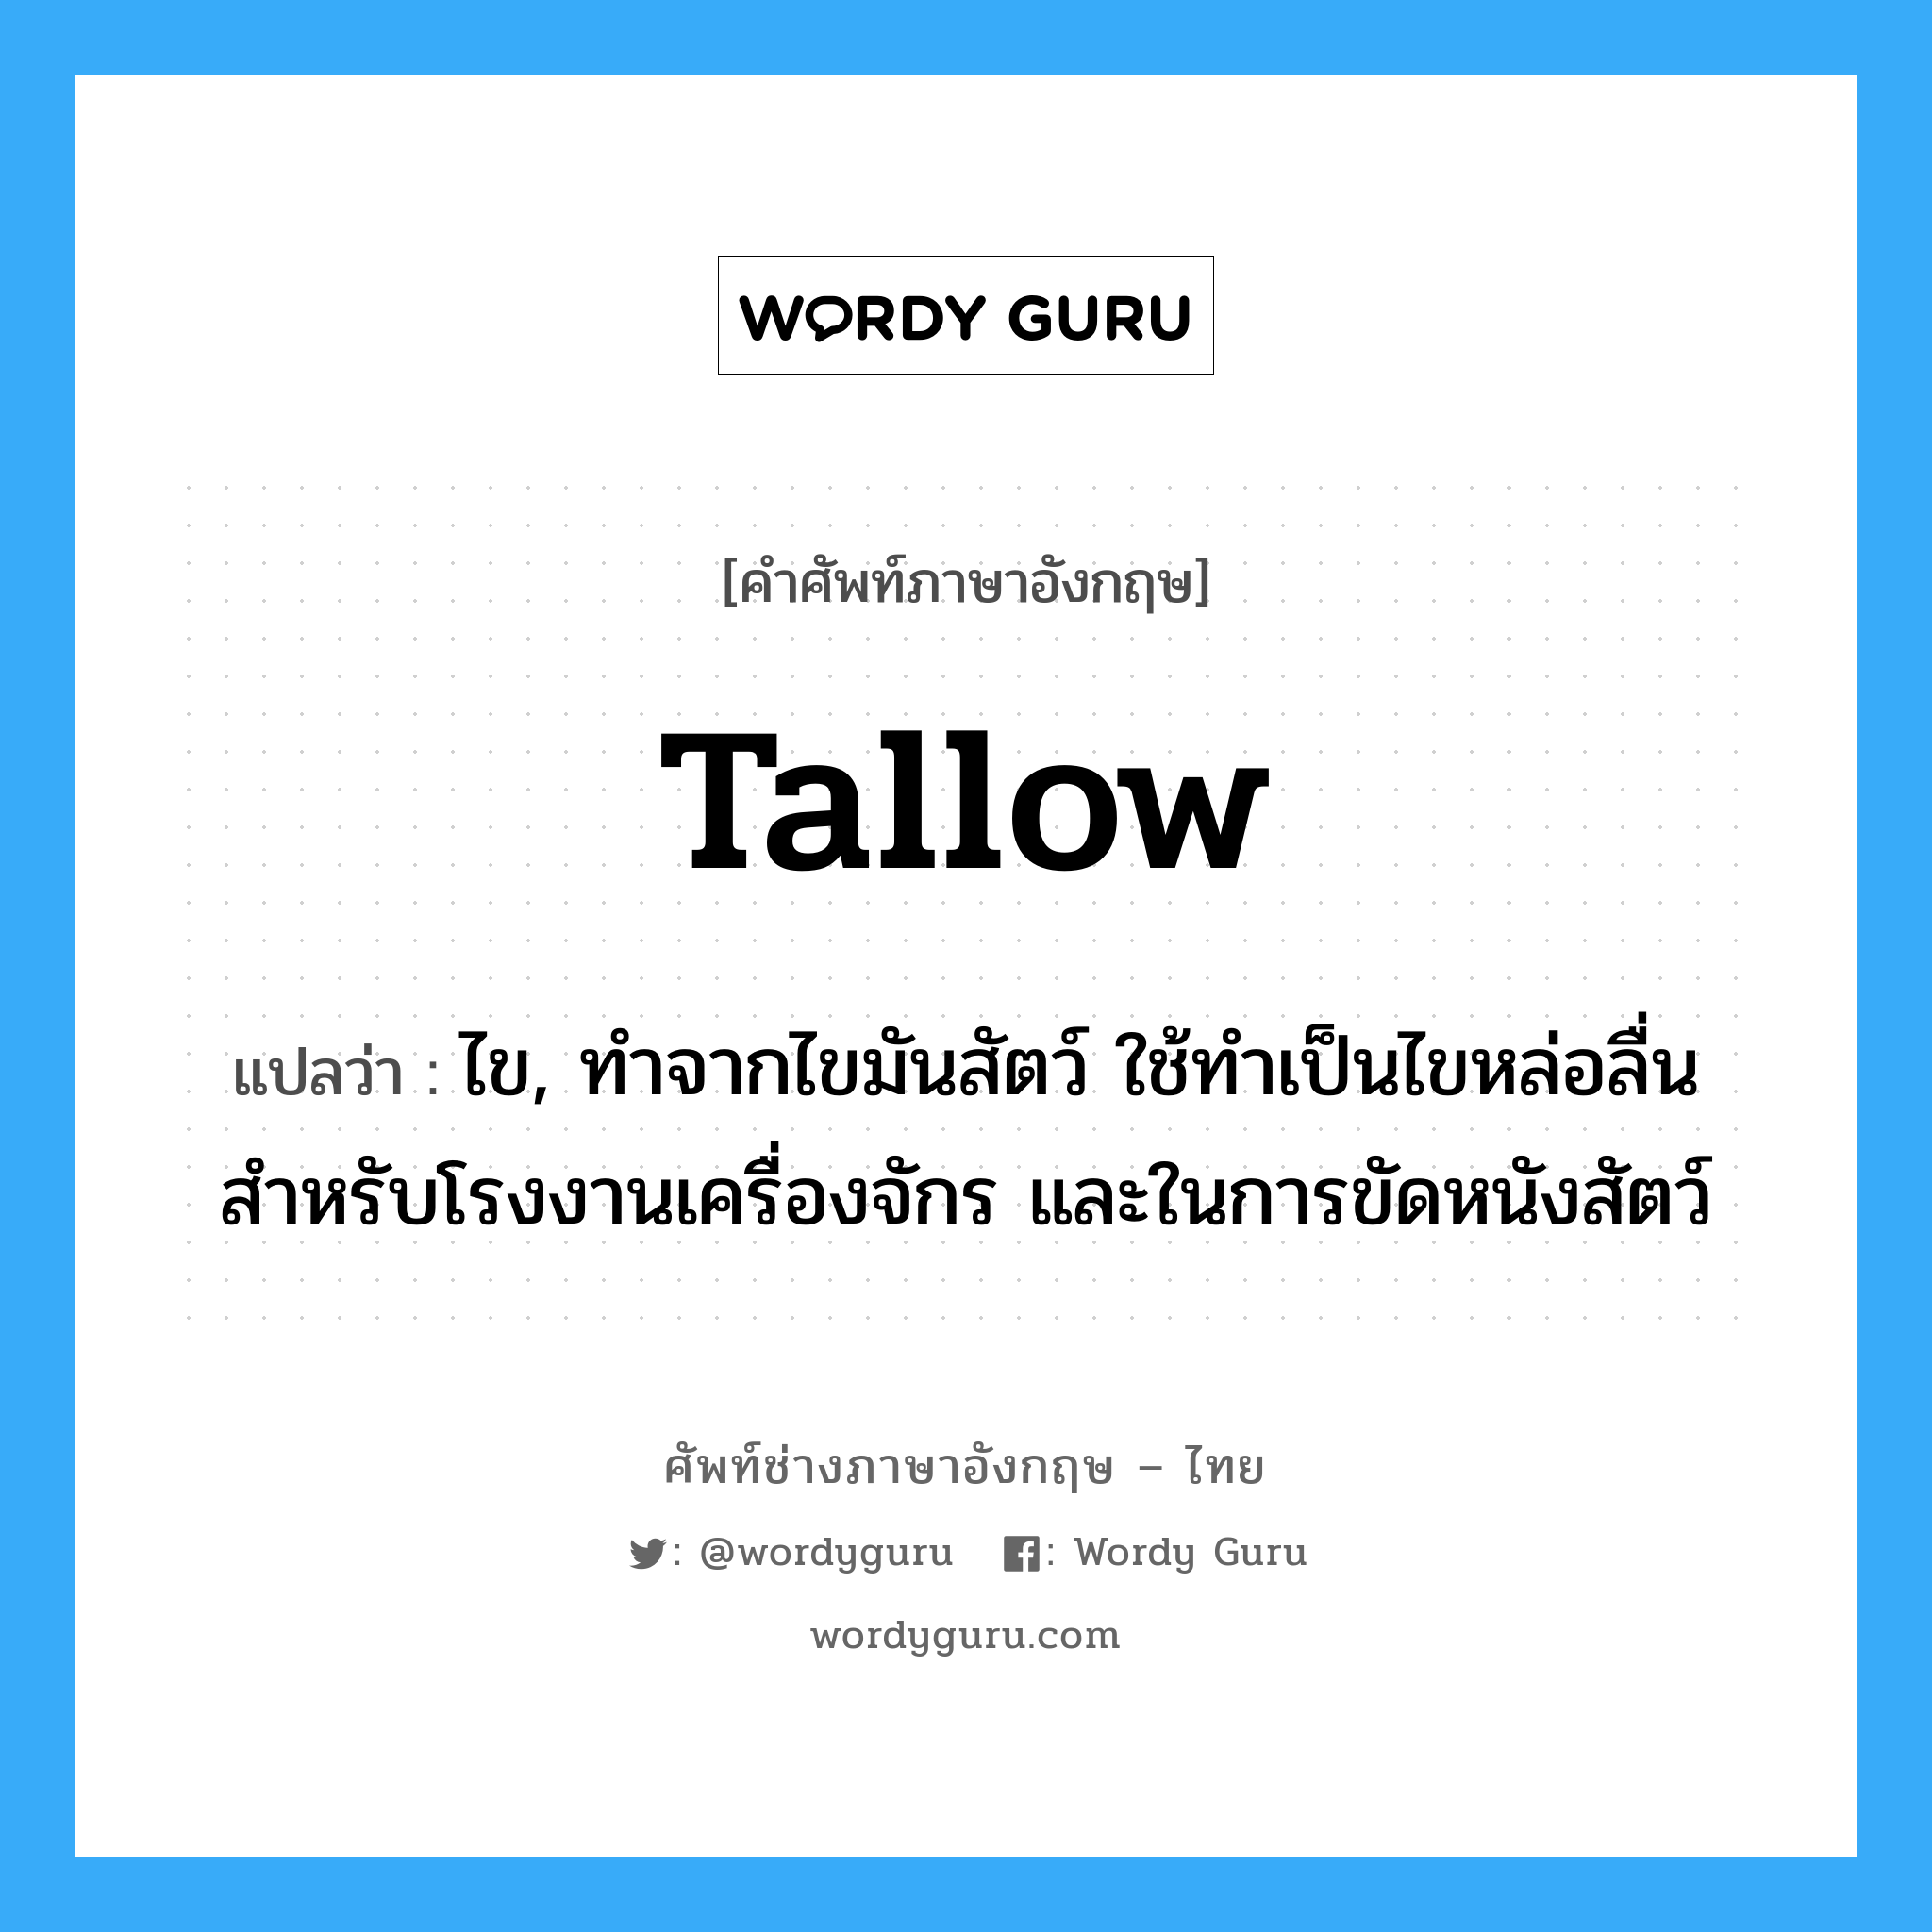 tallow แปลว่า?, คำศัพท์ช่างภาษาอังกฤษ - ไทย tallow คำศัพท์ภาษาอังกฤษ tallow แปลว่า ไข, ทำจากไขมันสัตว์ ใช้ทำเป็นไขหล่อลื่นสำหรับโรงงานเครื่องจักร และในการขัดหนังสัตว์